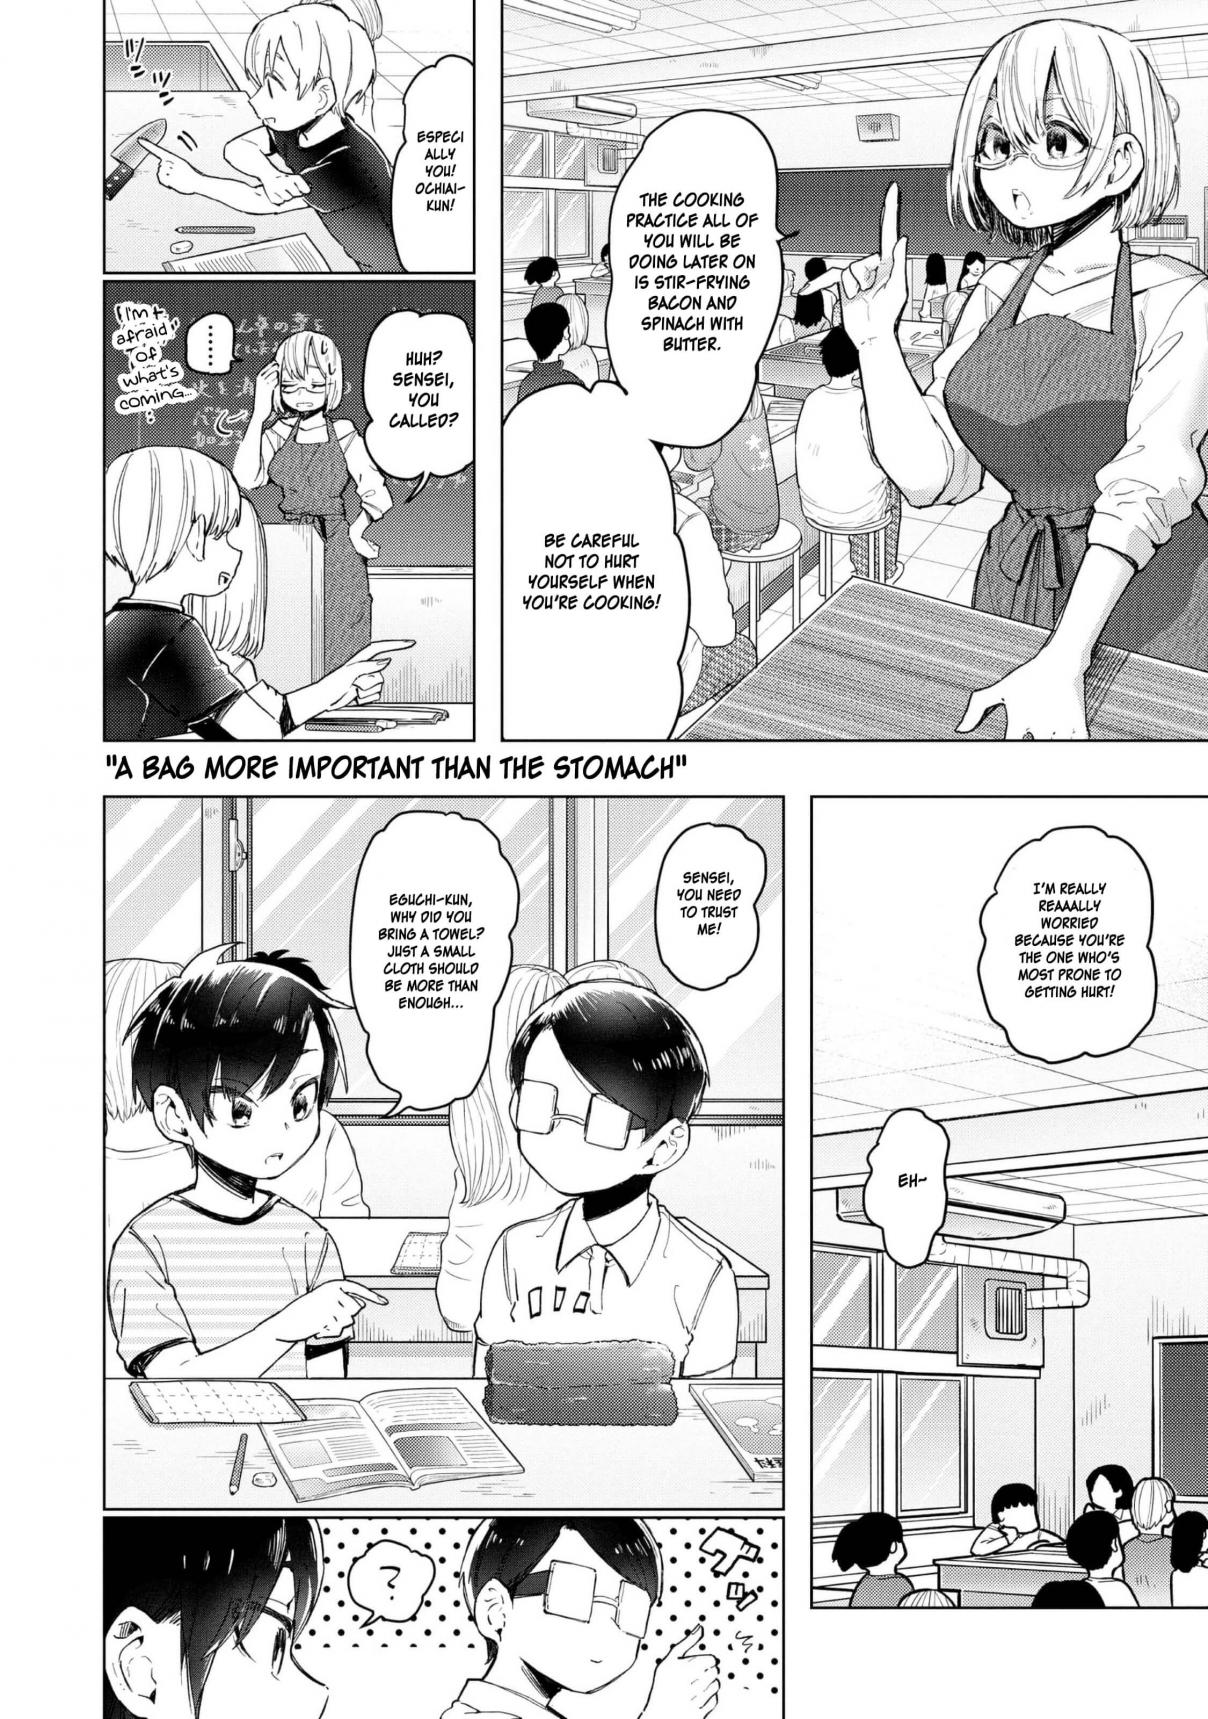 Eguchi kun Doesn't Miss a Thing Vol. 4 Ch. 19 Eguchi And Teachers